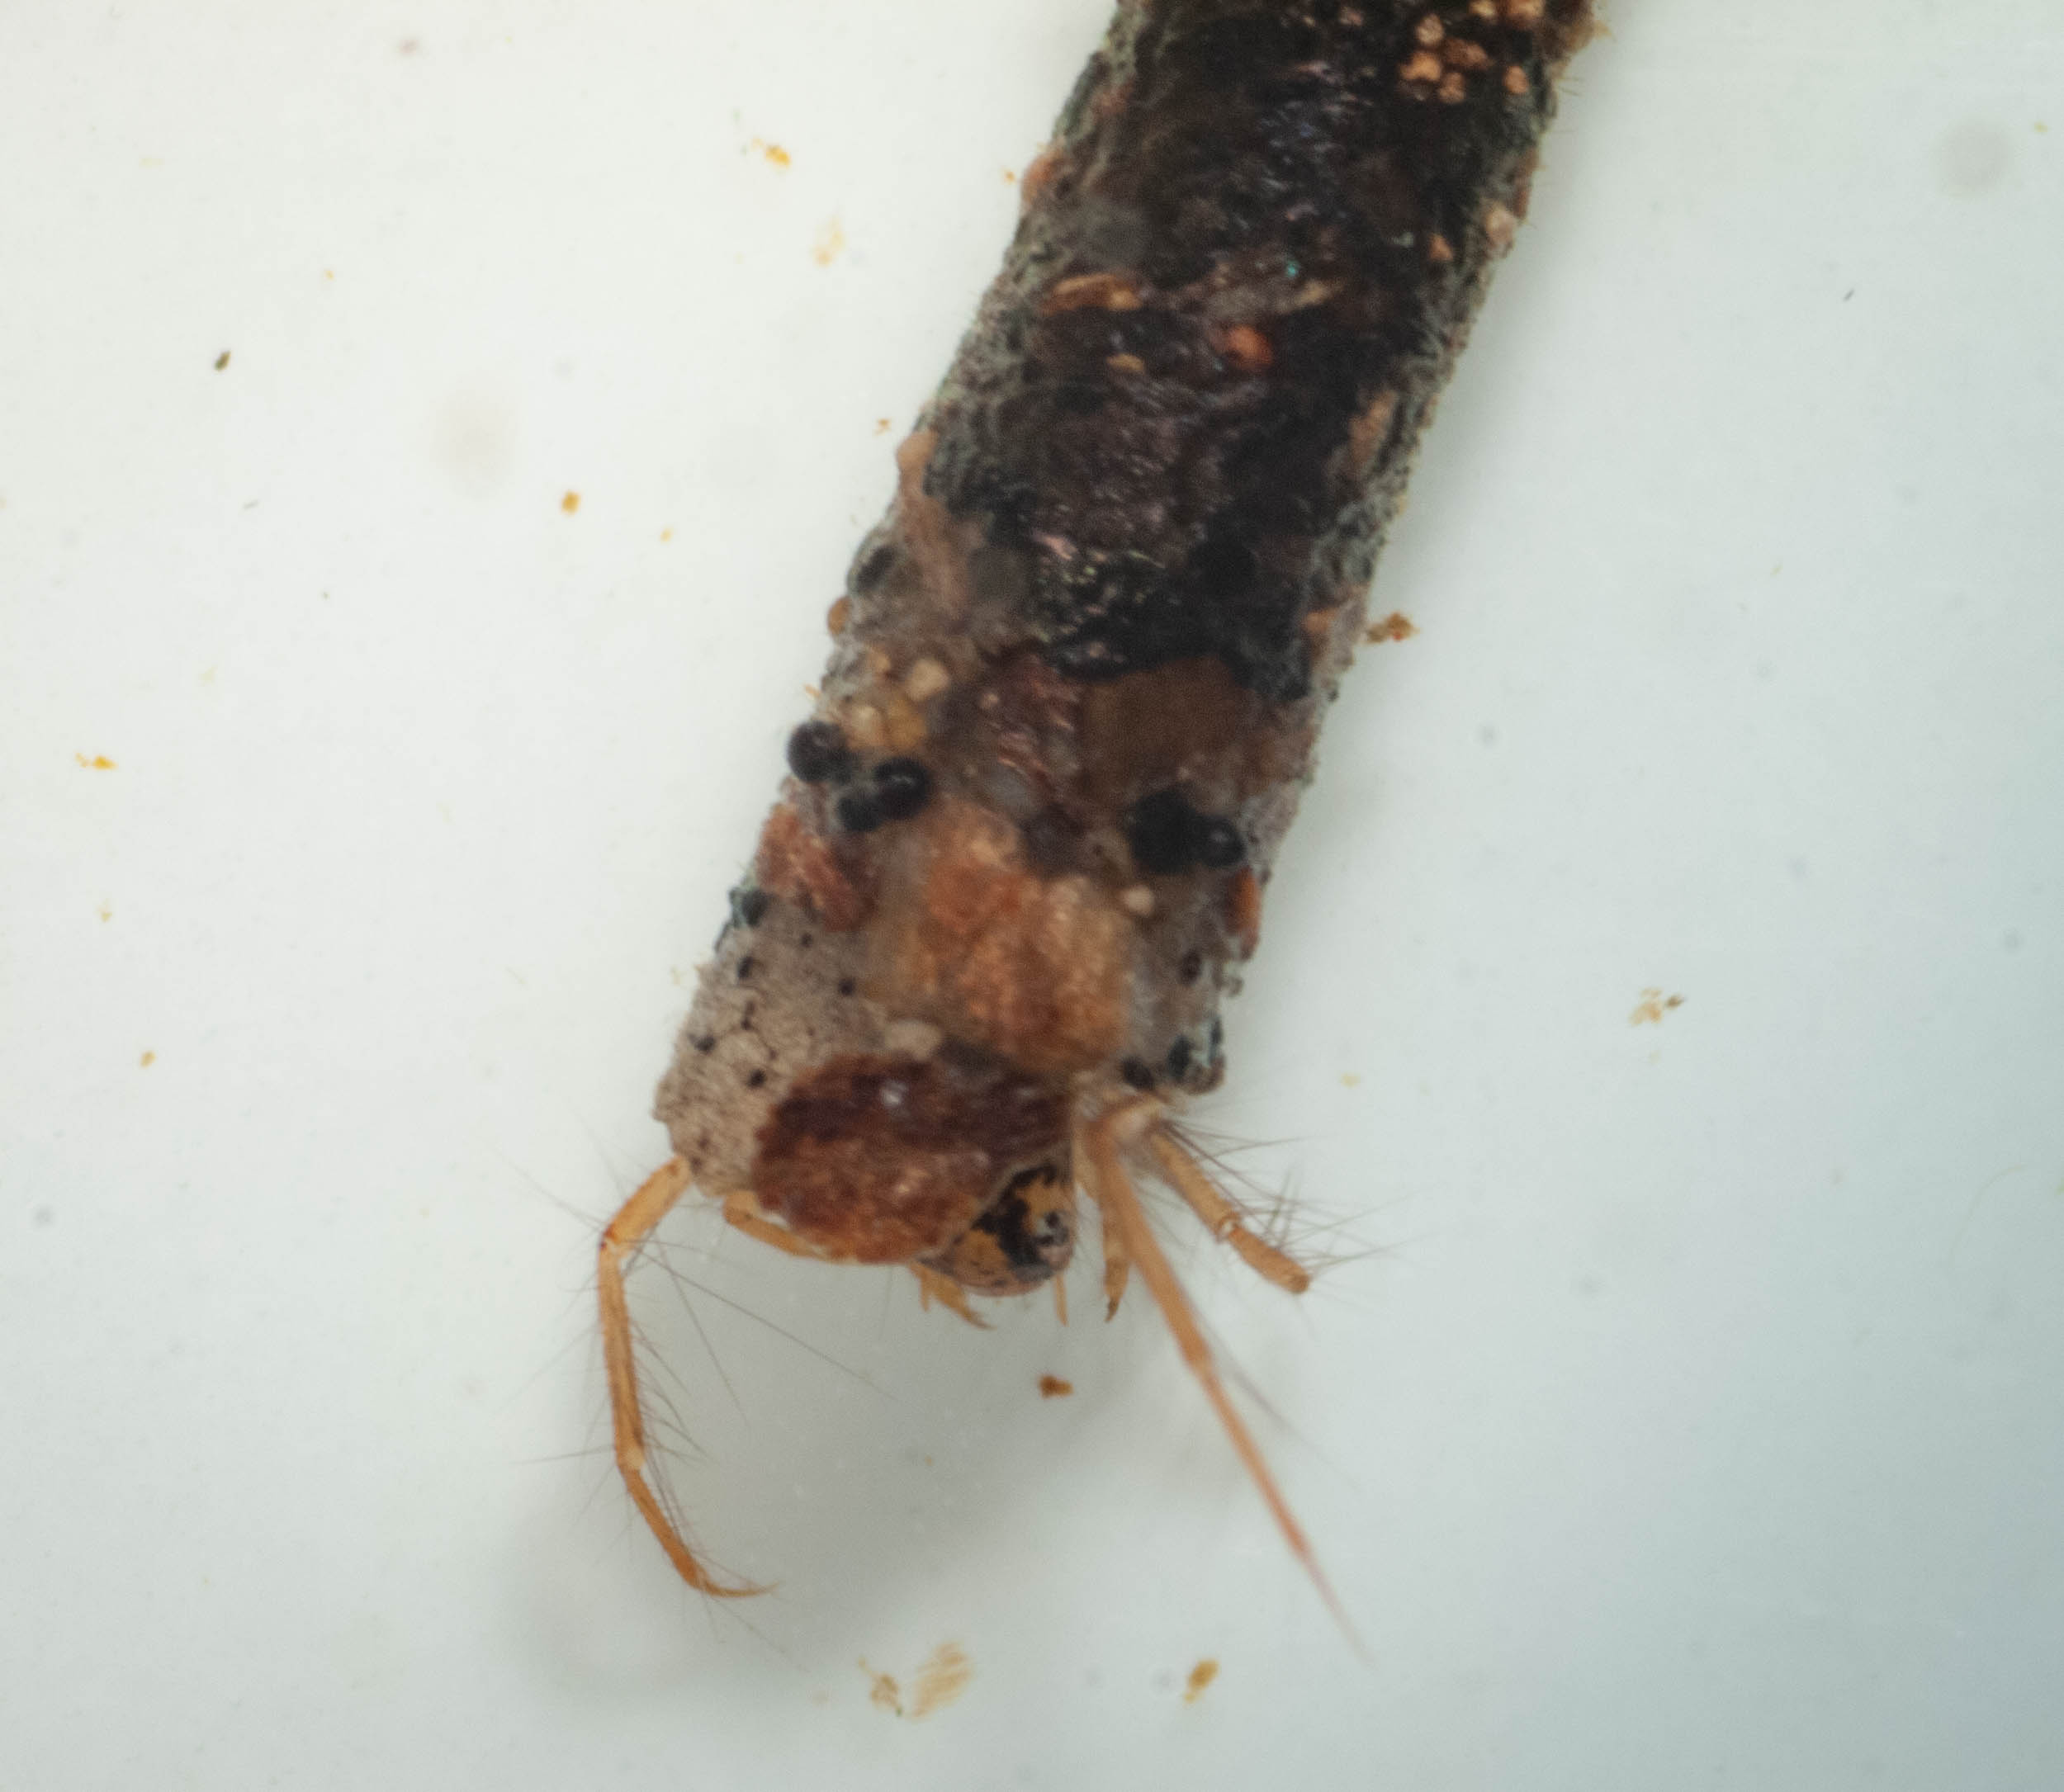 caddisfly larva